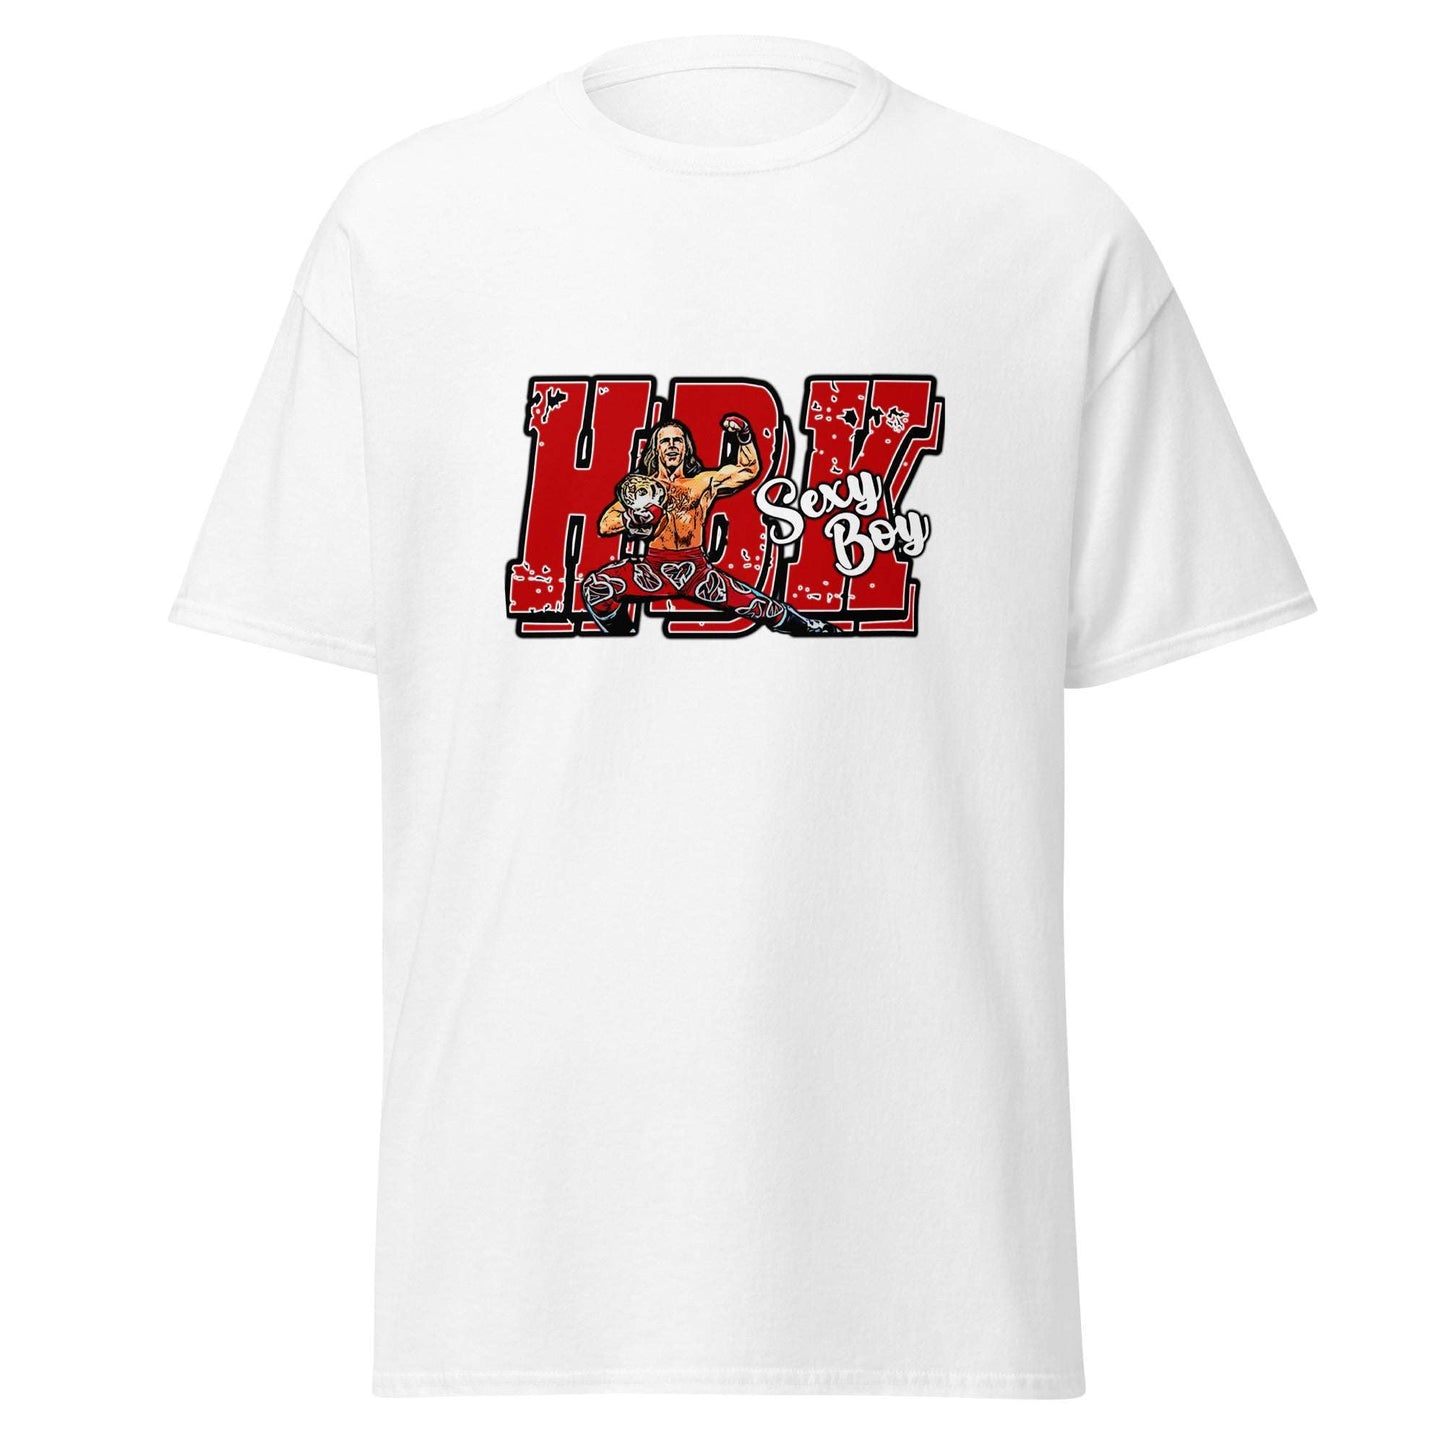 Shawn Michaels Heartbreak Kid Wrestling Shirt - Retro 80s Style - thenightmareinc